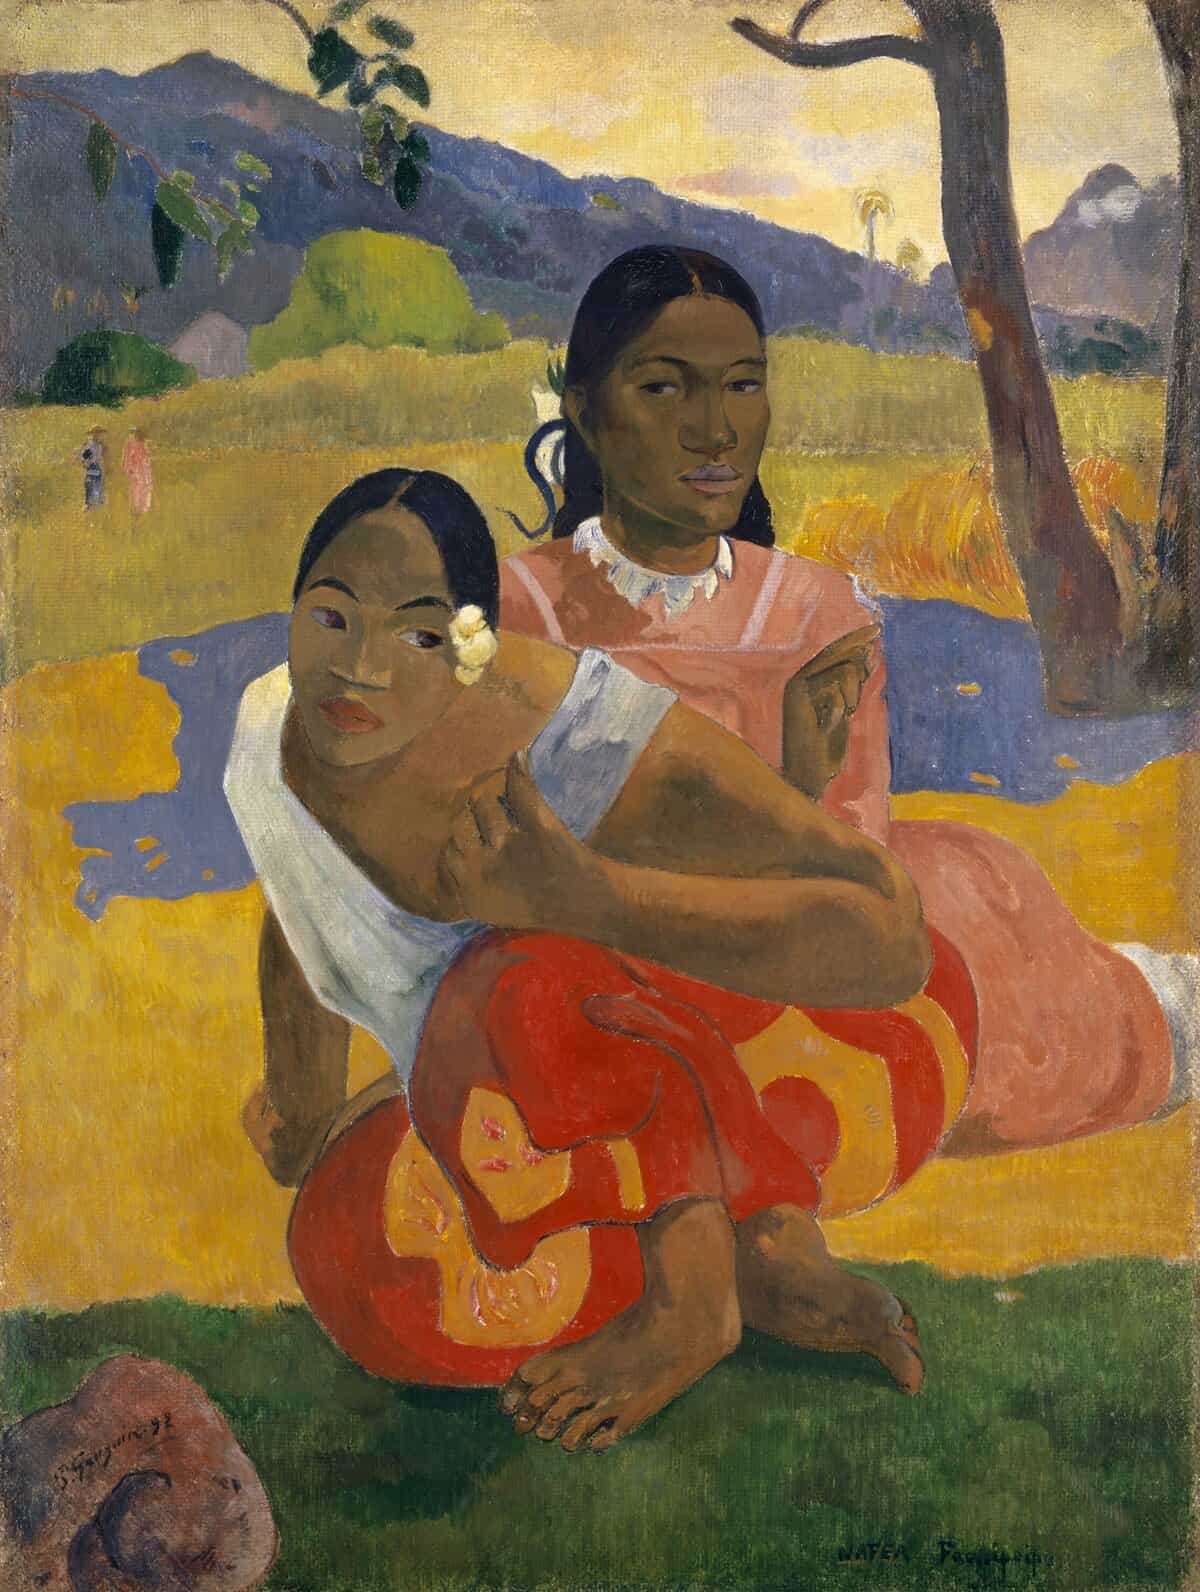 Paul Gauguin’s Nafea Faa Ipoipo